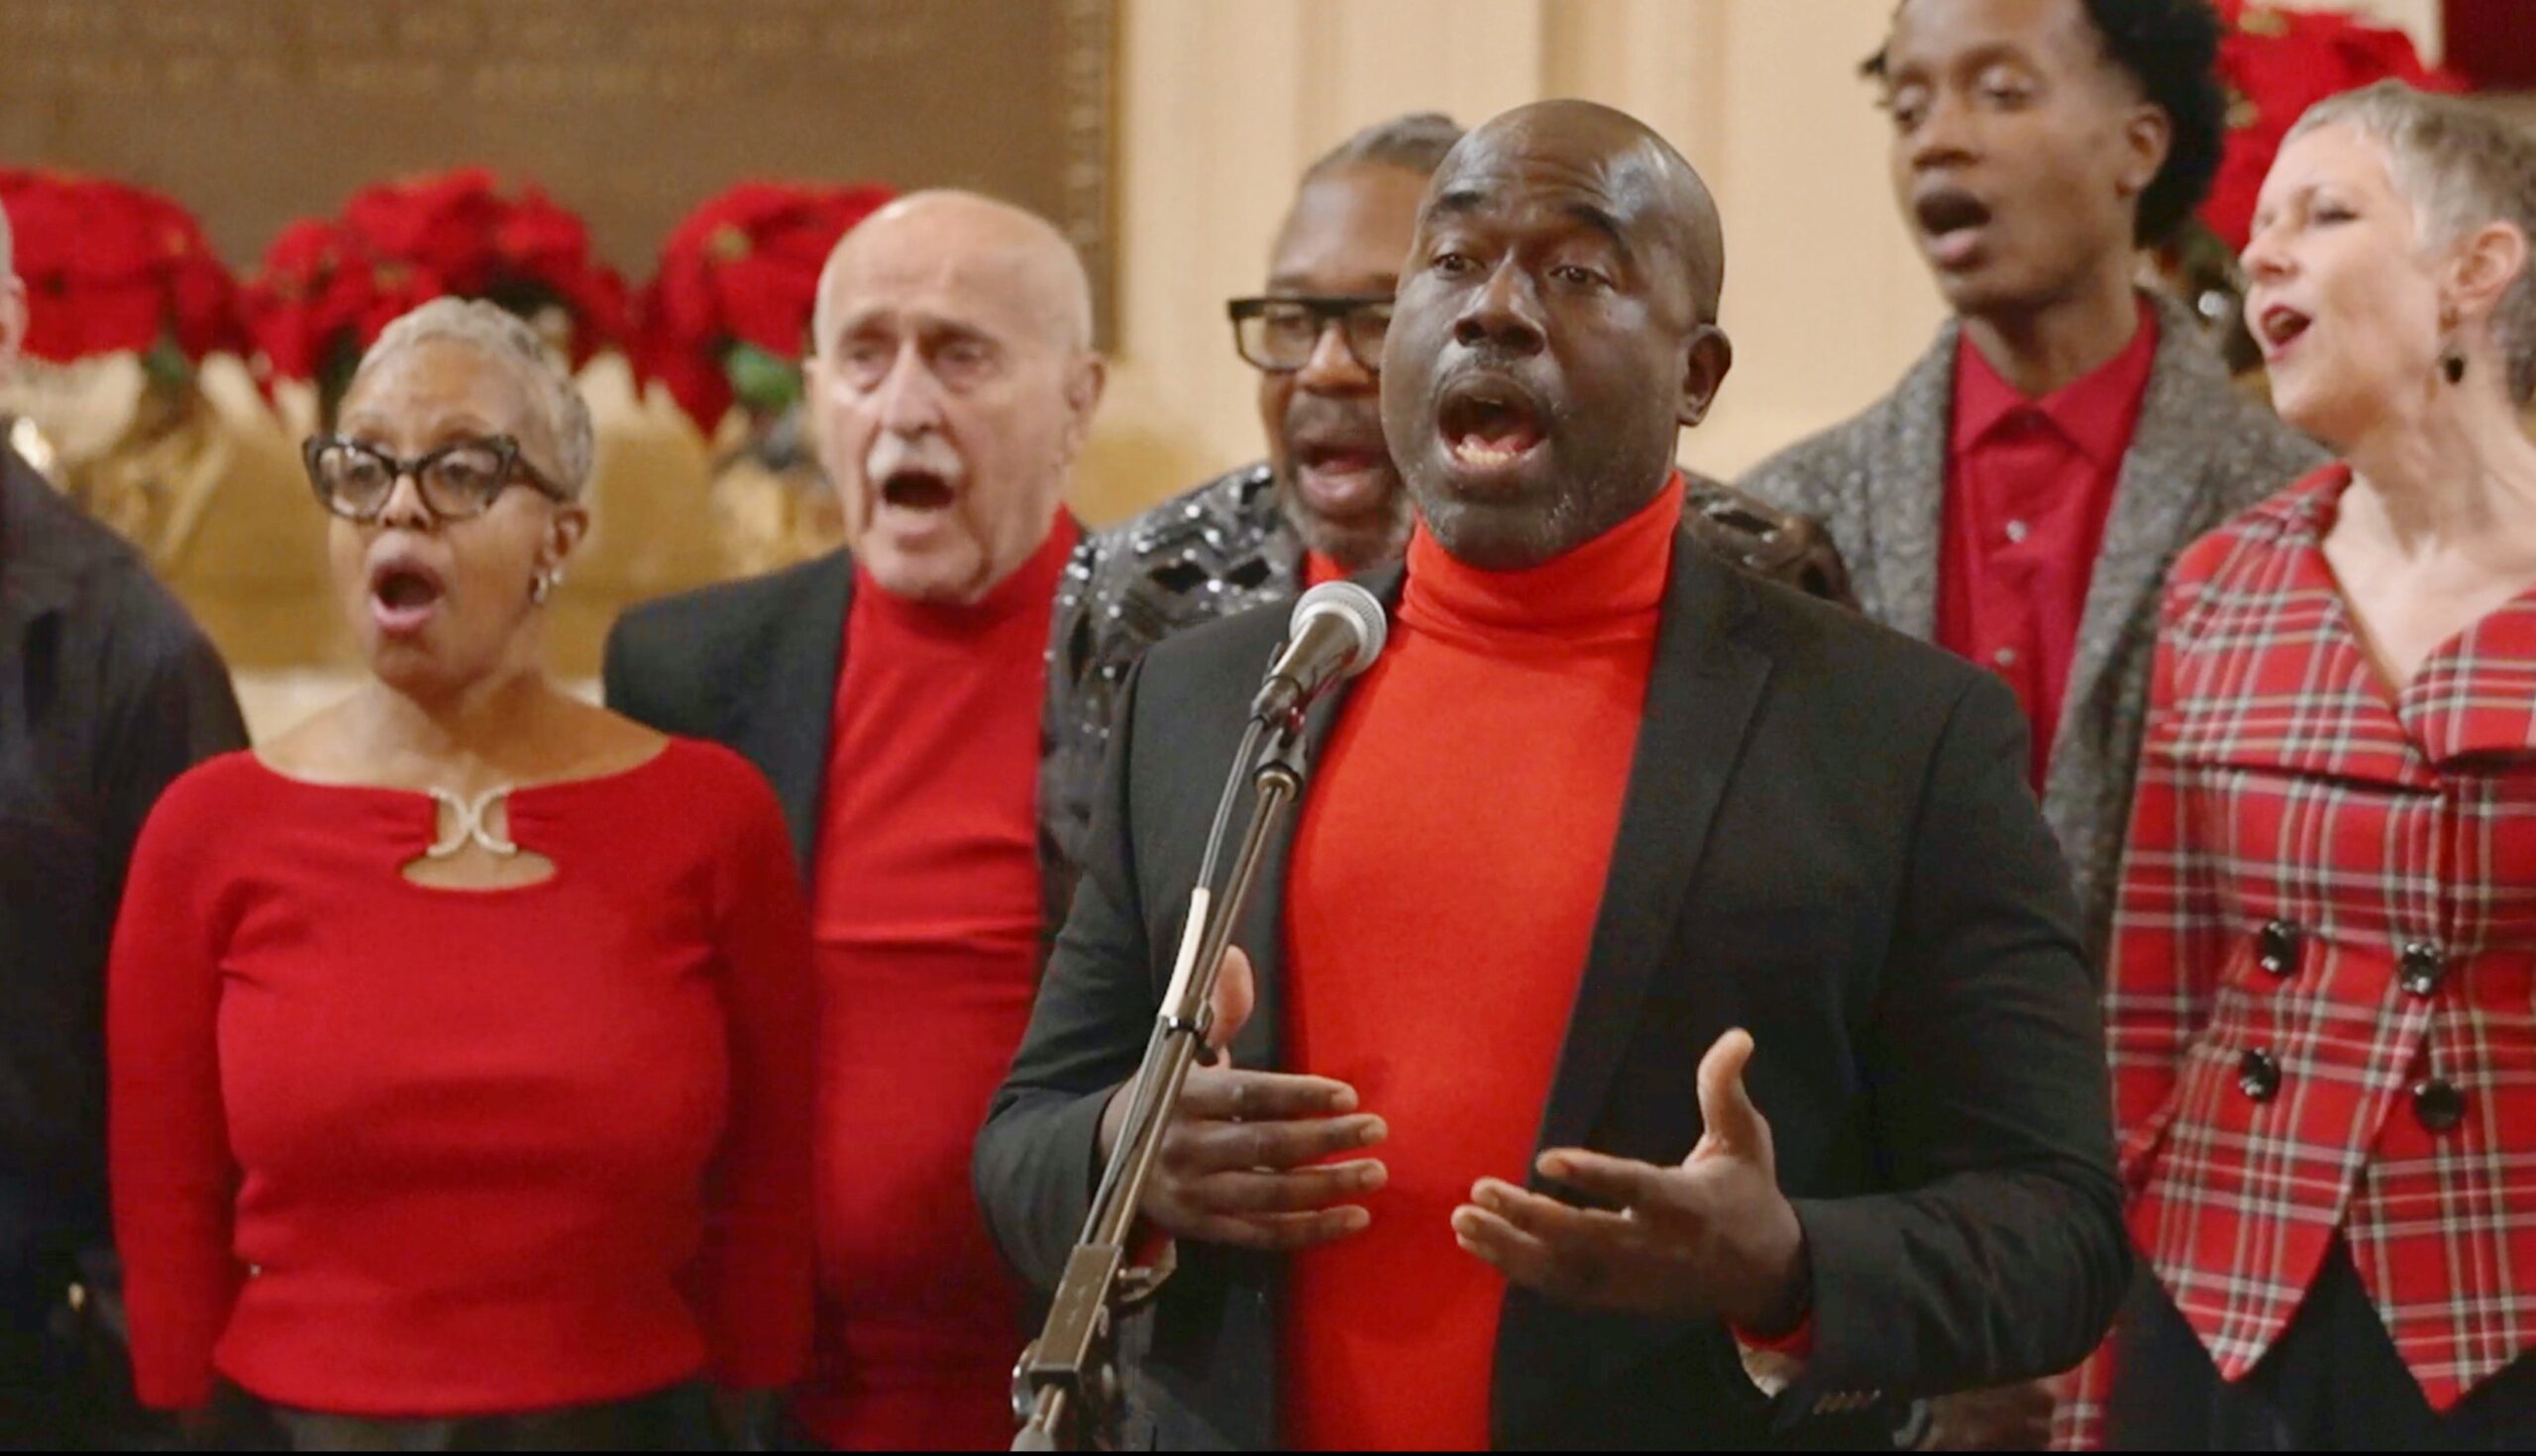 Members of the choir singing Christmas music